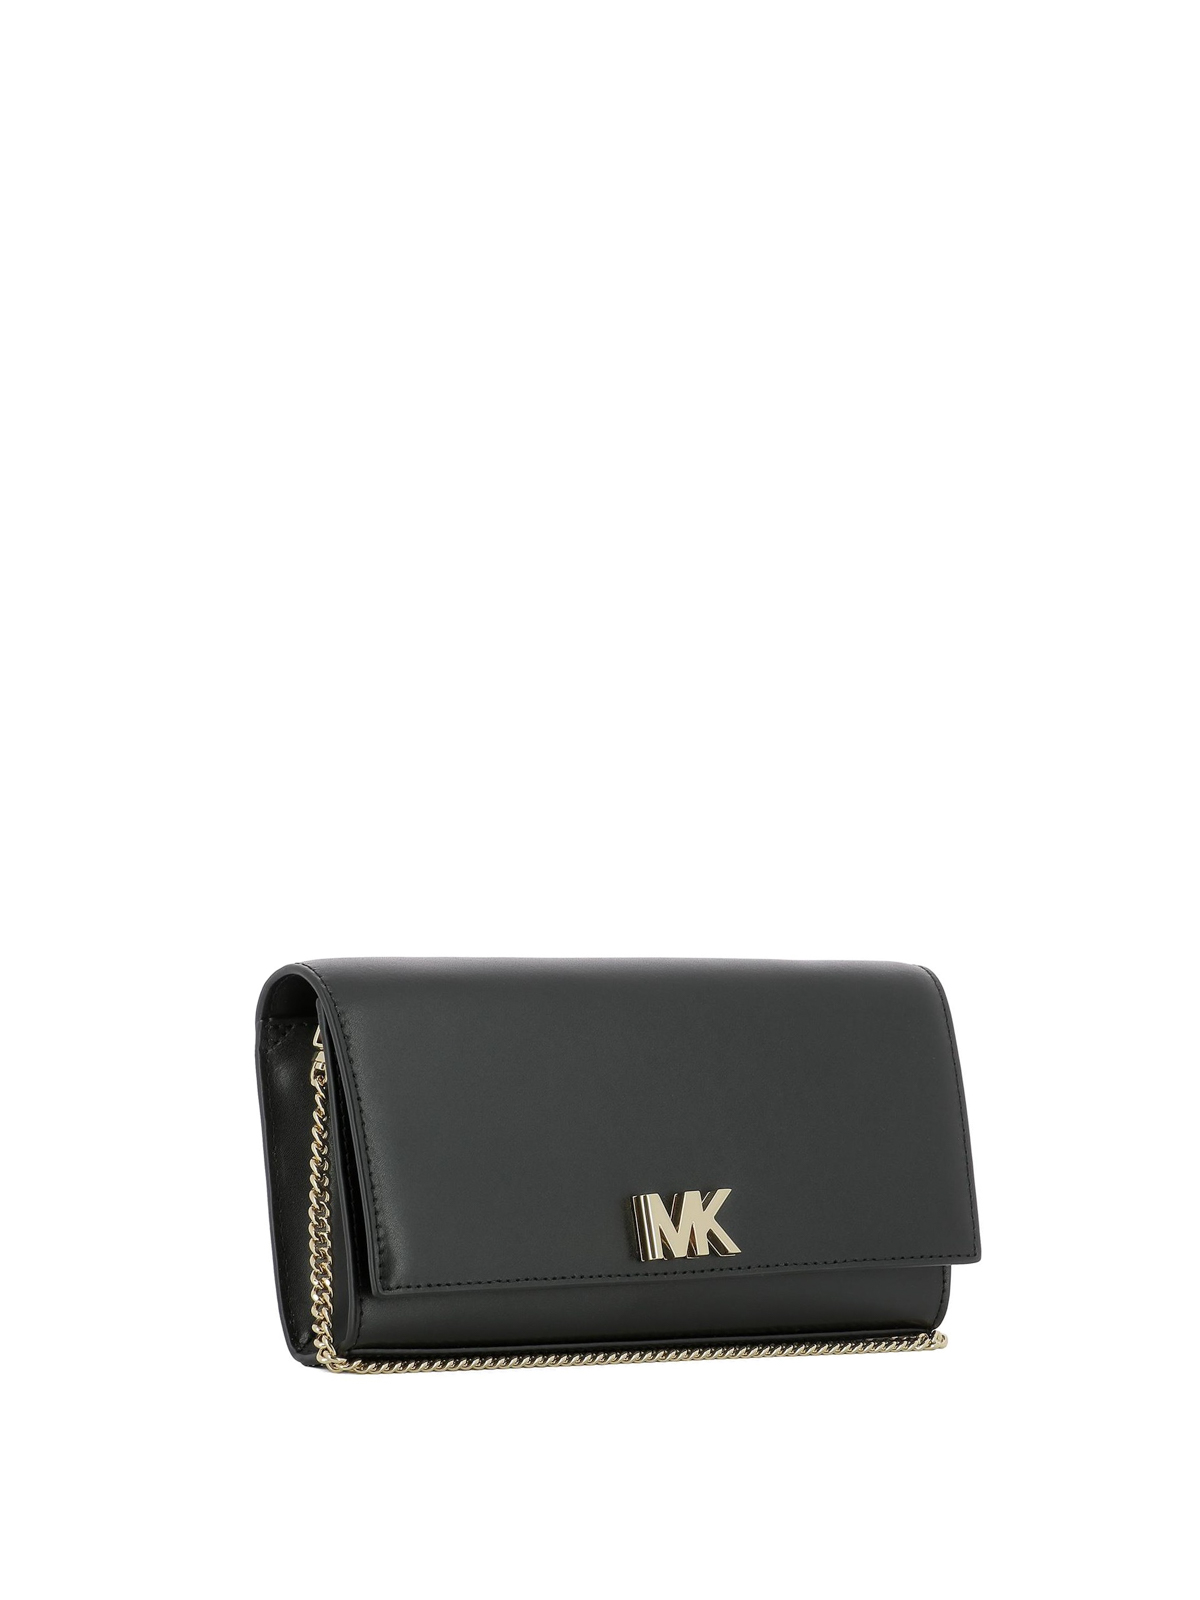 michael kors wallet mk logo